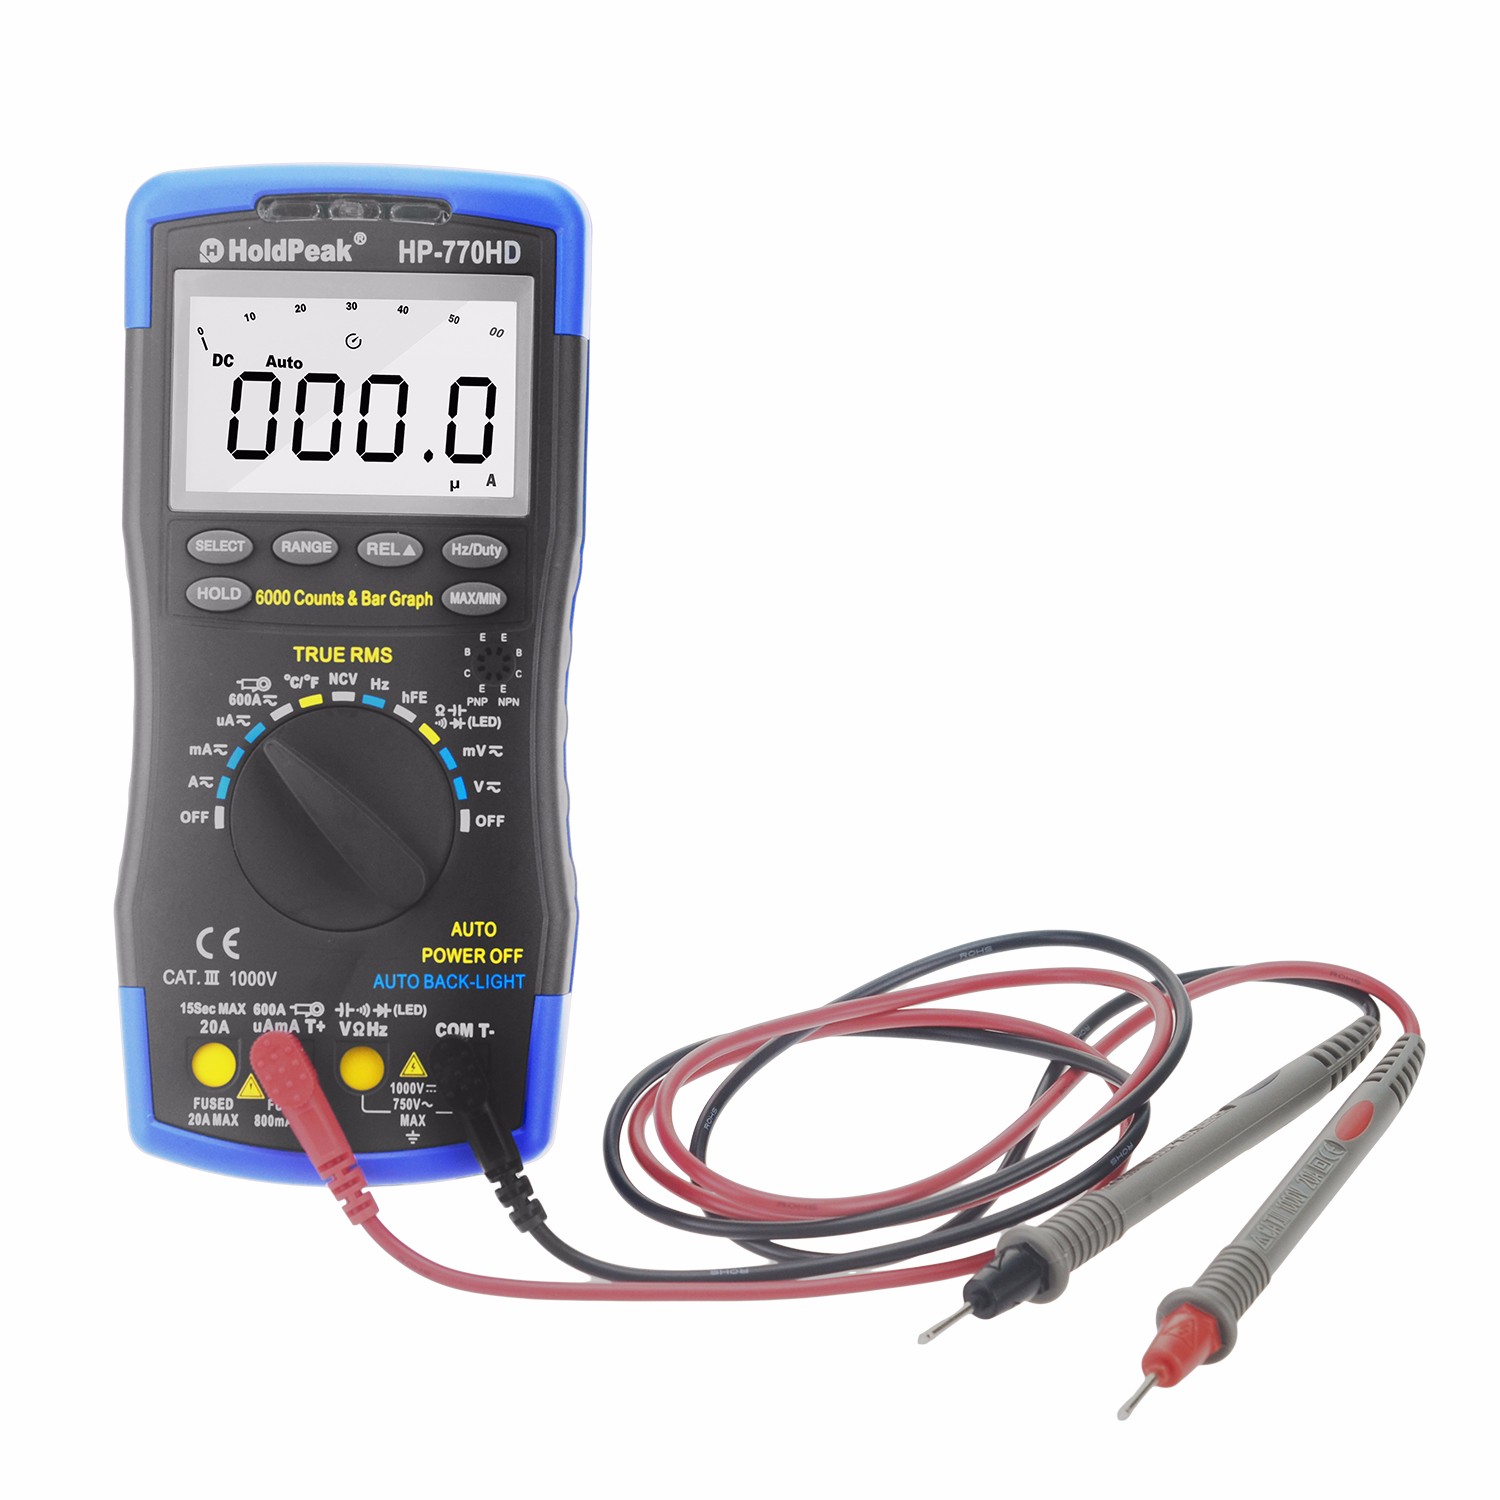 HoldPeak new arrival electrical digital multimeter manufacturers for measurements